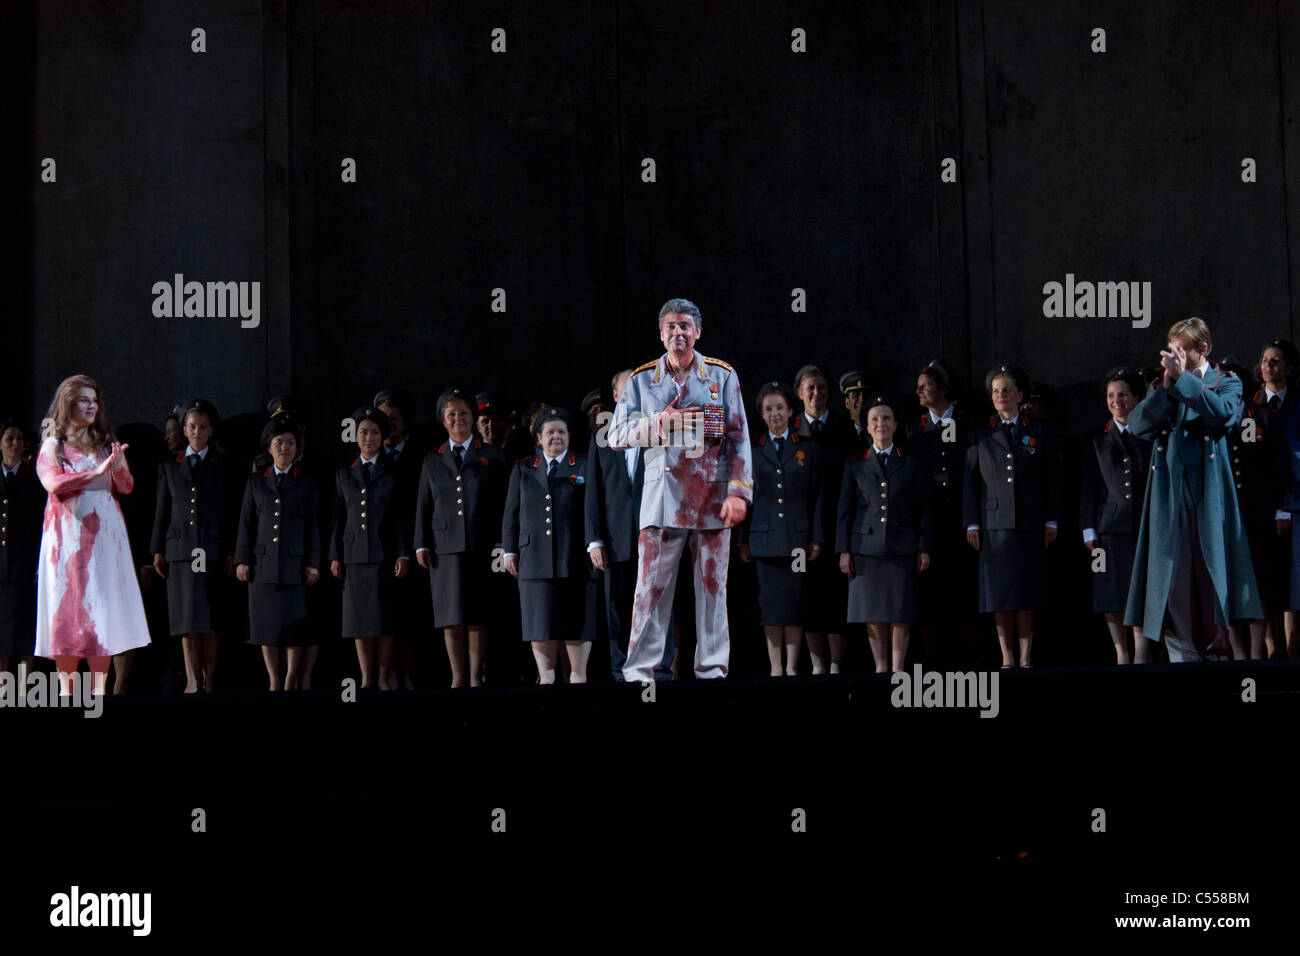 Macbeth at curtain call of performance of Verdi's Macbeth at the Deutsche Oper, Berlin, Germany Stock Photo